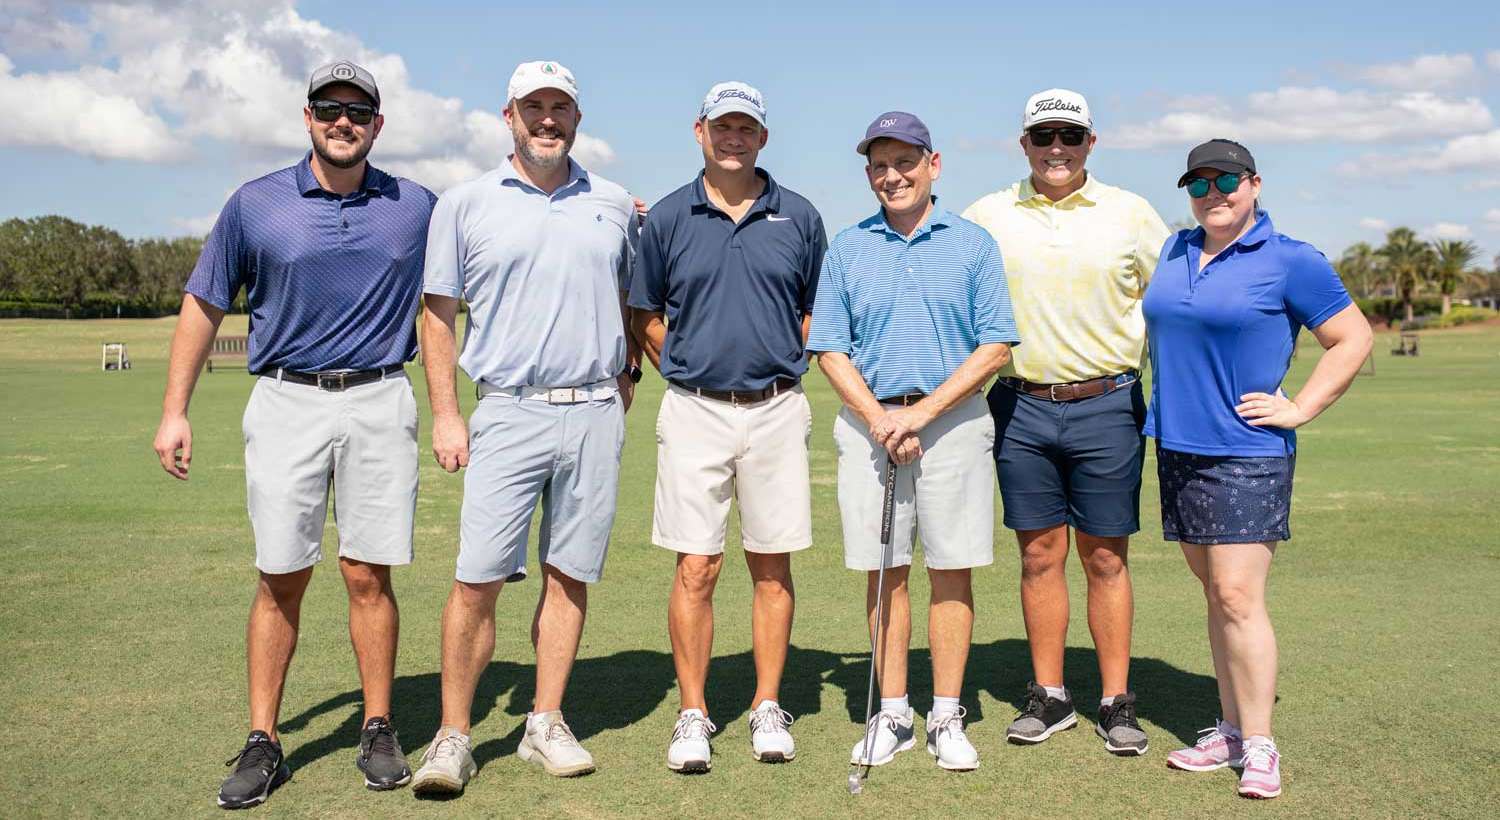 Building Dreams Foundation’s first annual golf scramble raises more than $50,000